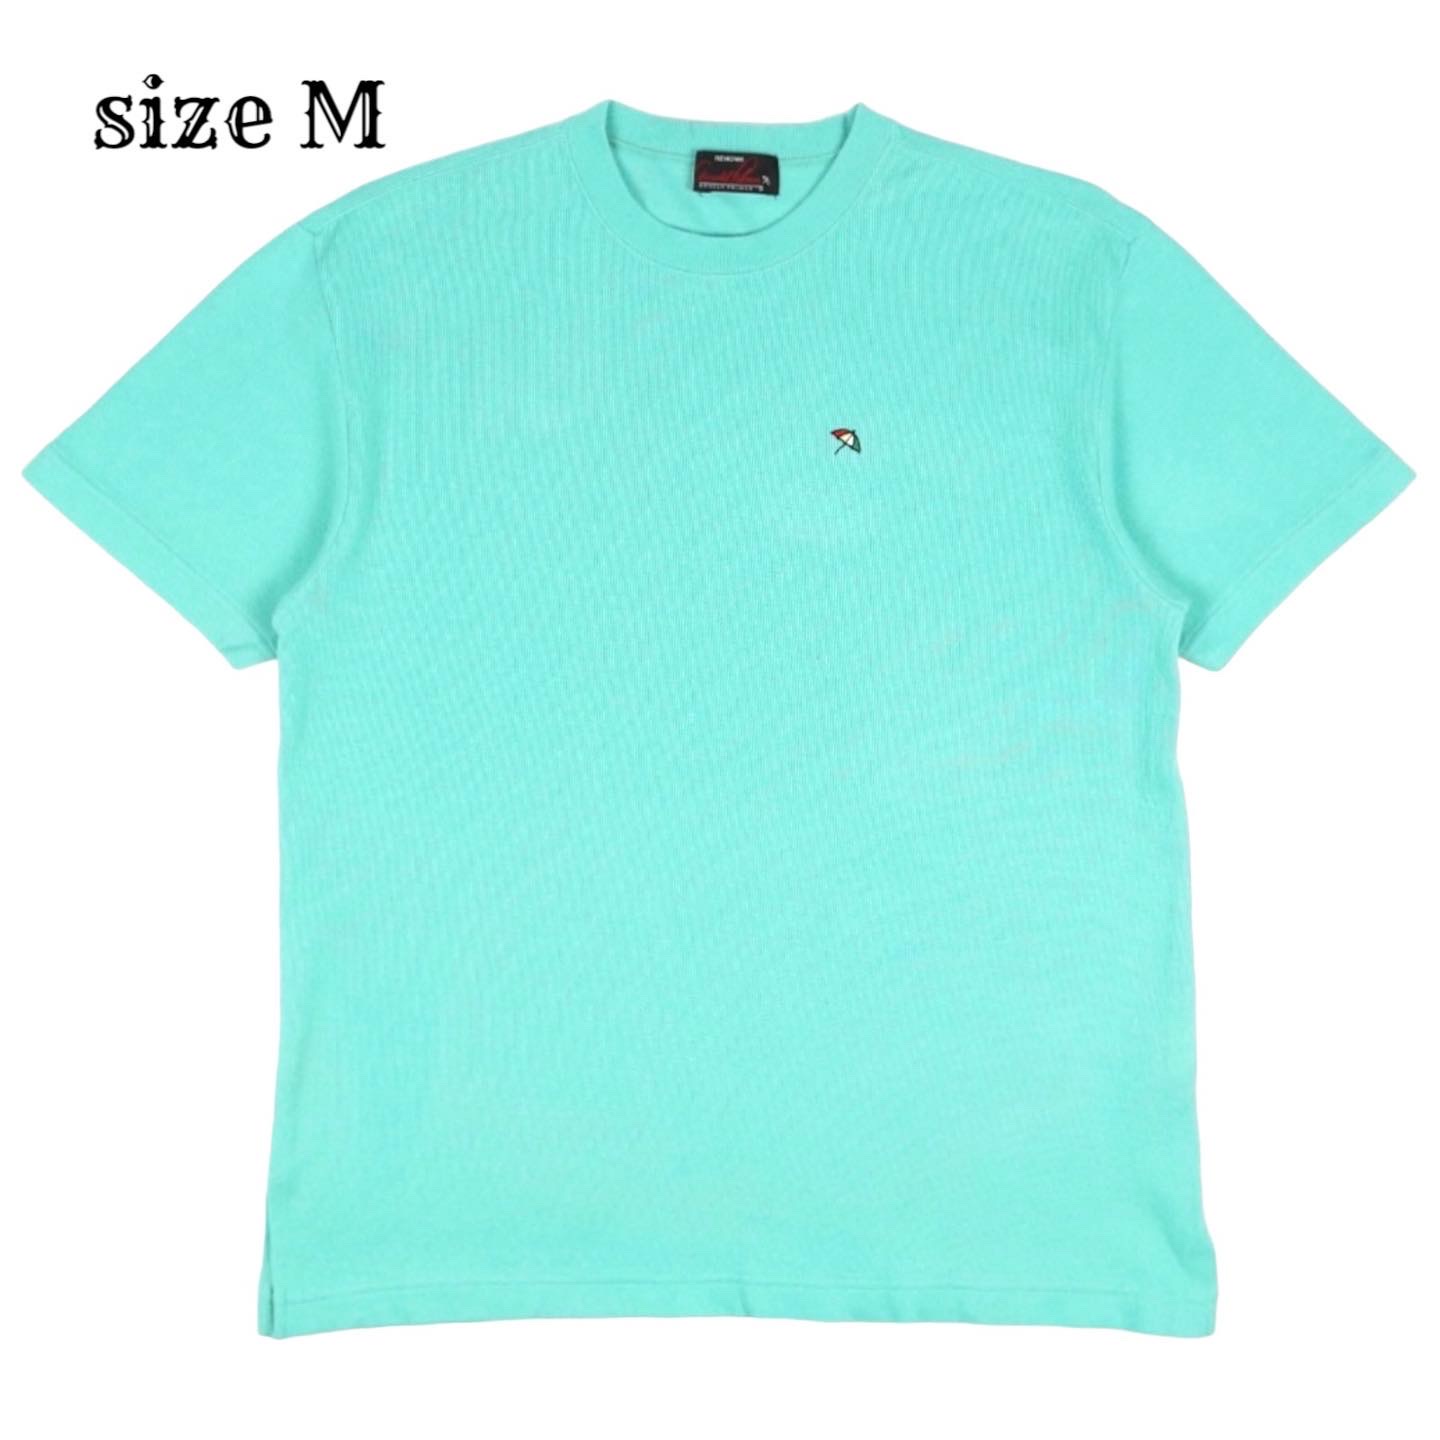 Arnold Palmer T-Shirt Size M